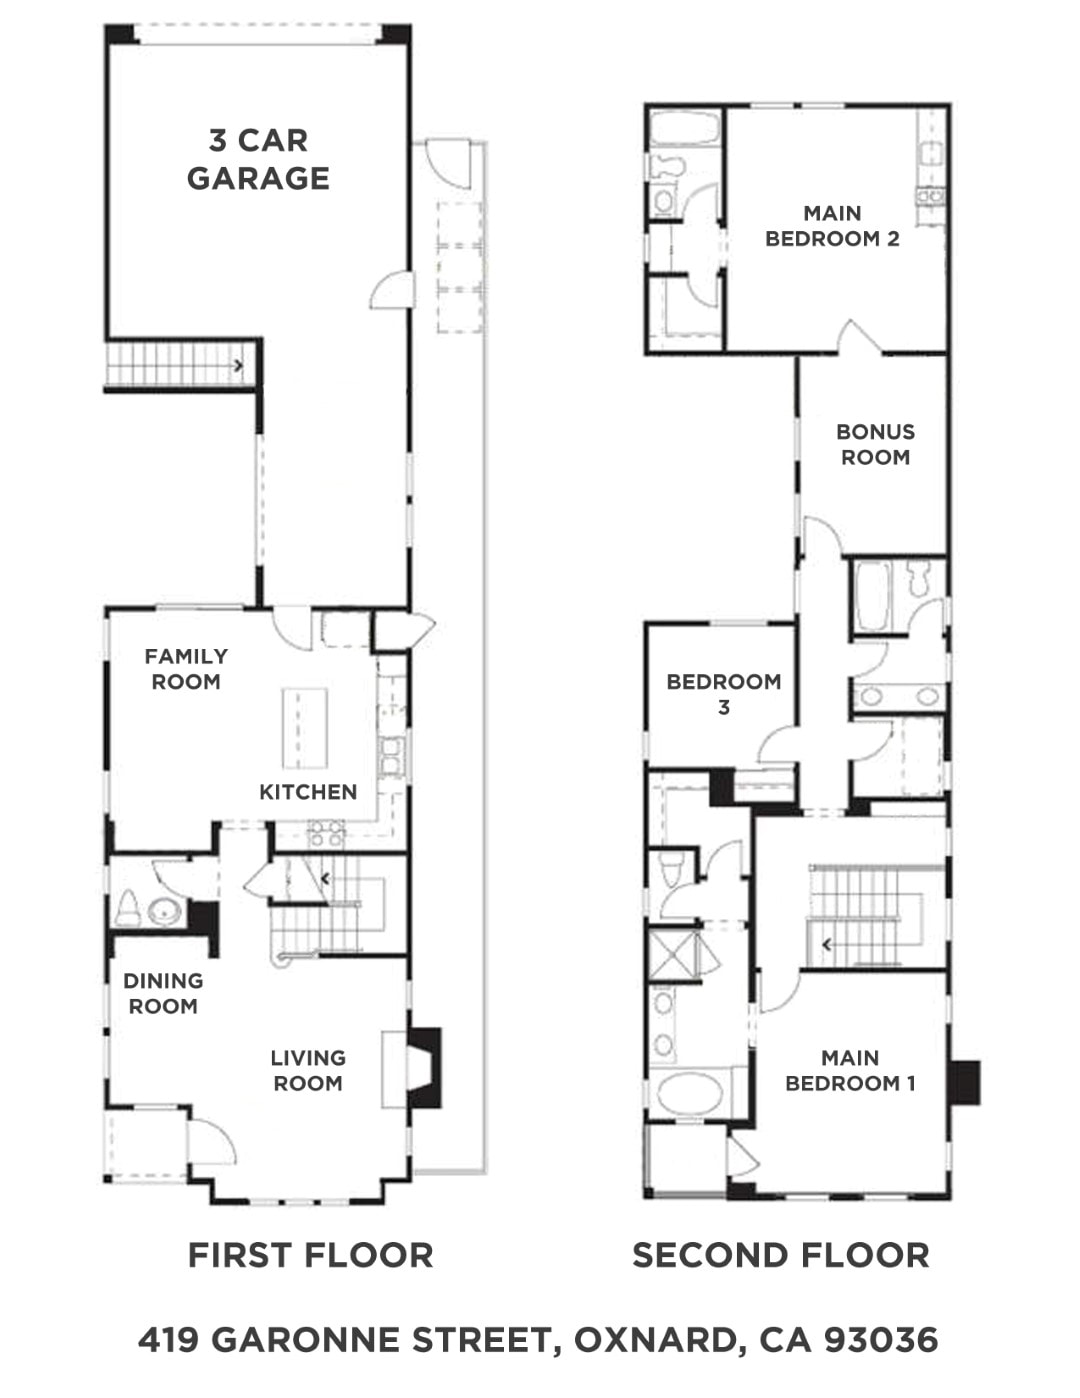 419 Garonne Street, Oxnard, CA 93036 - Floor Plan